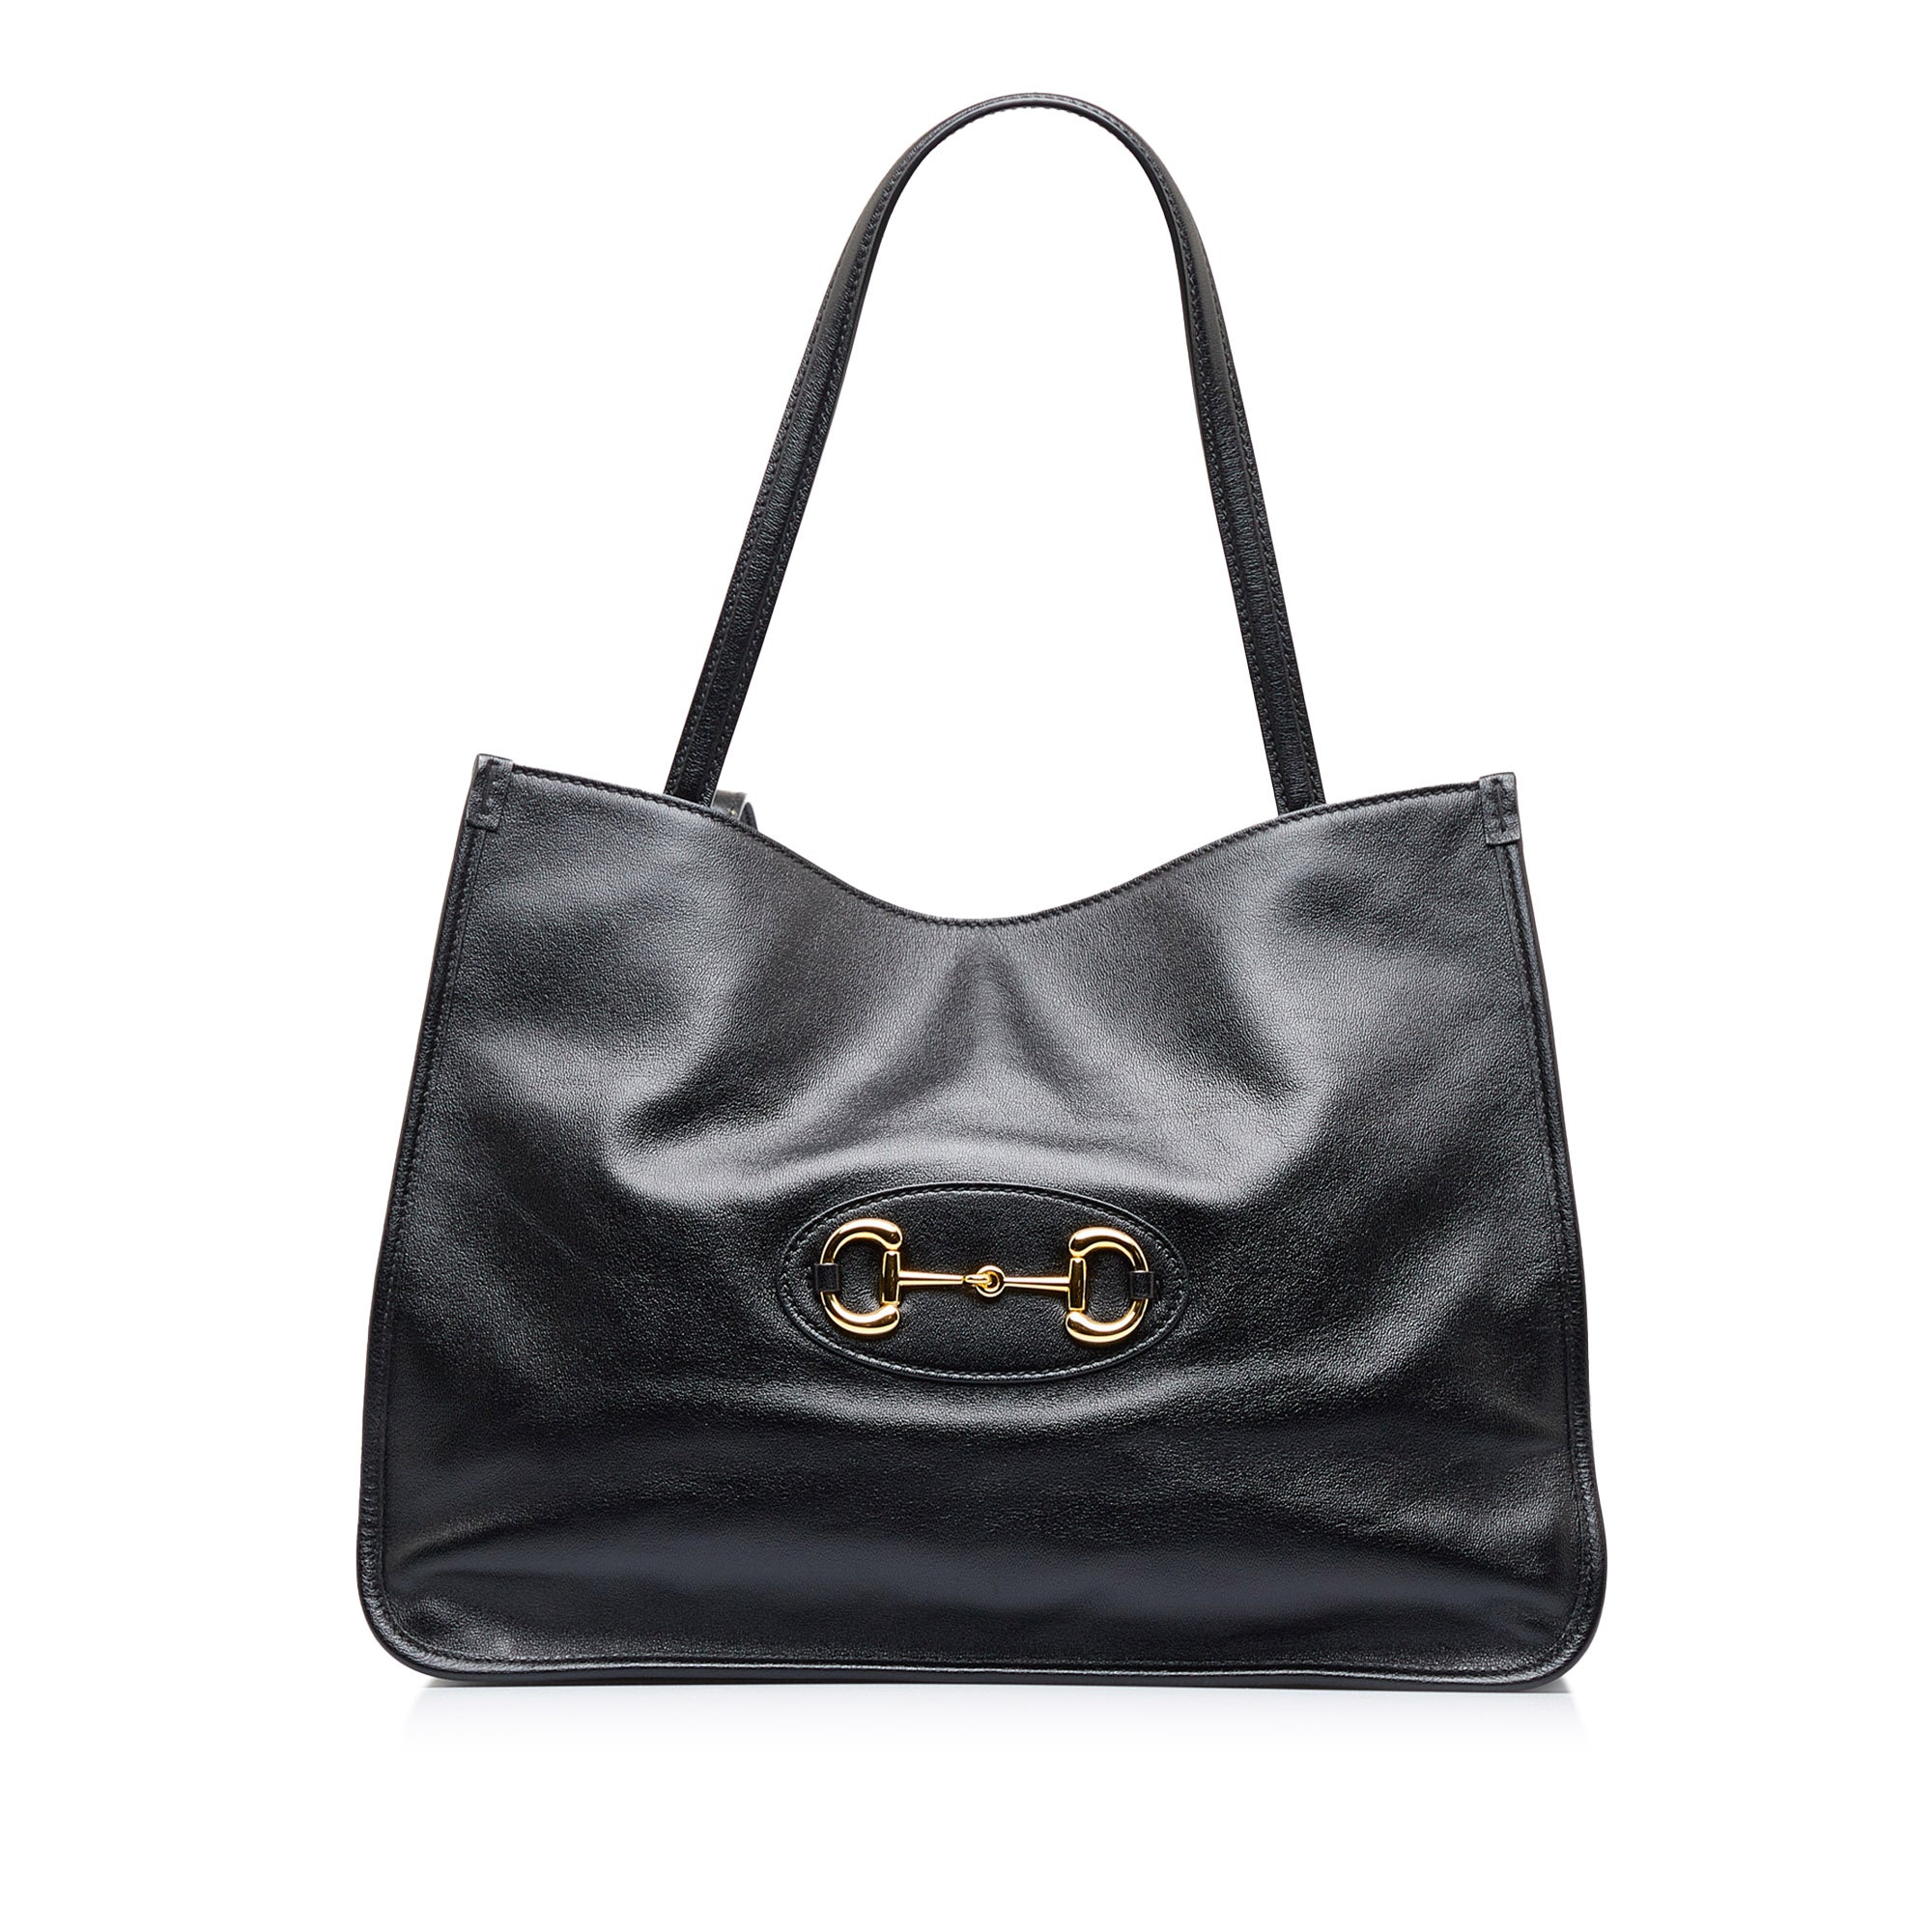 Gucci Horsebit 1955 Leather Shoulder Bag in Black - Gucci